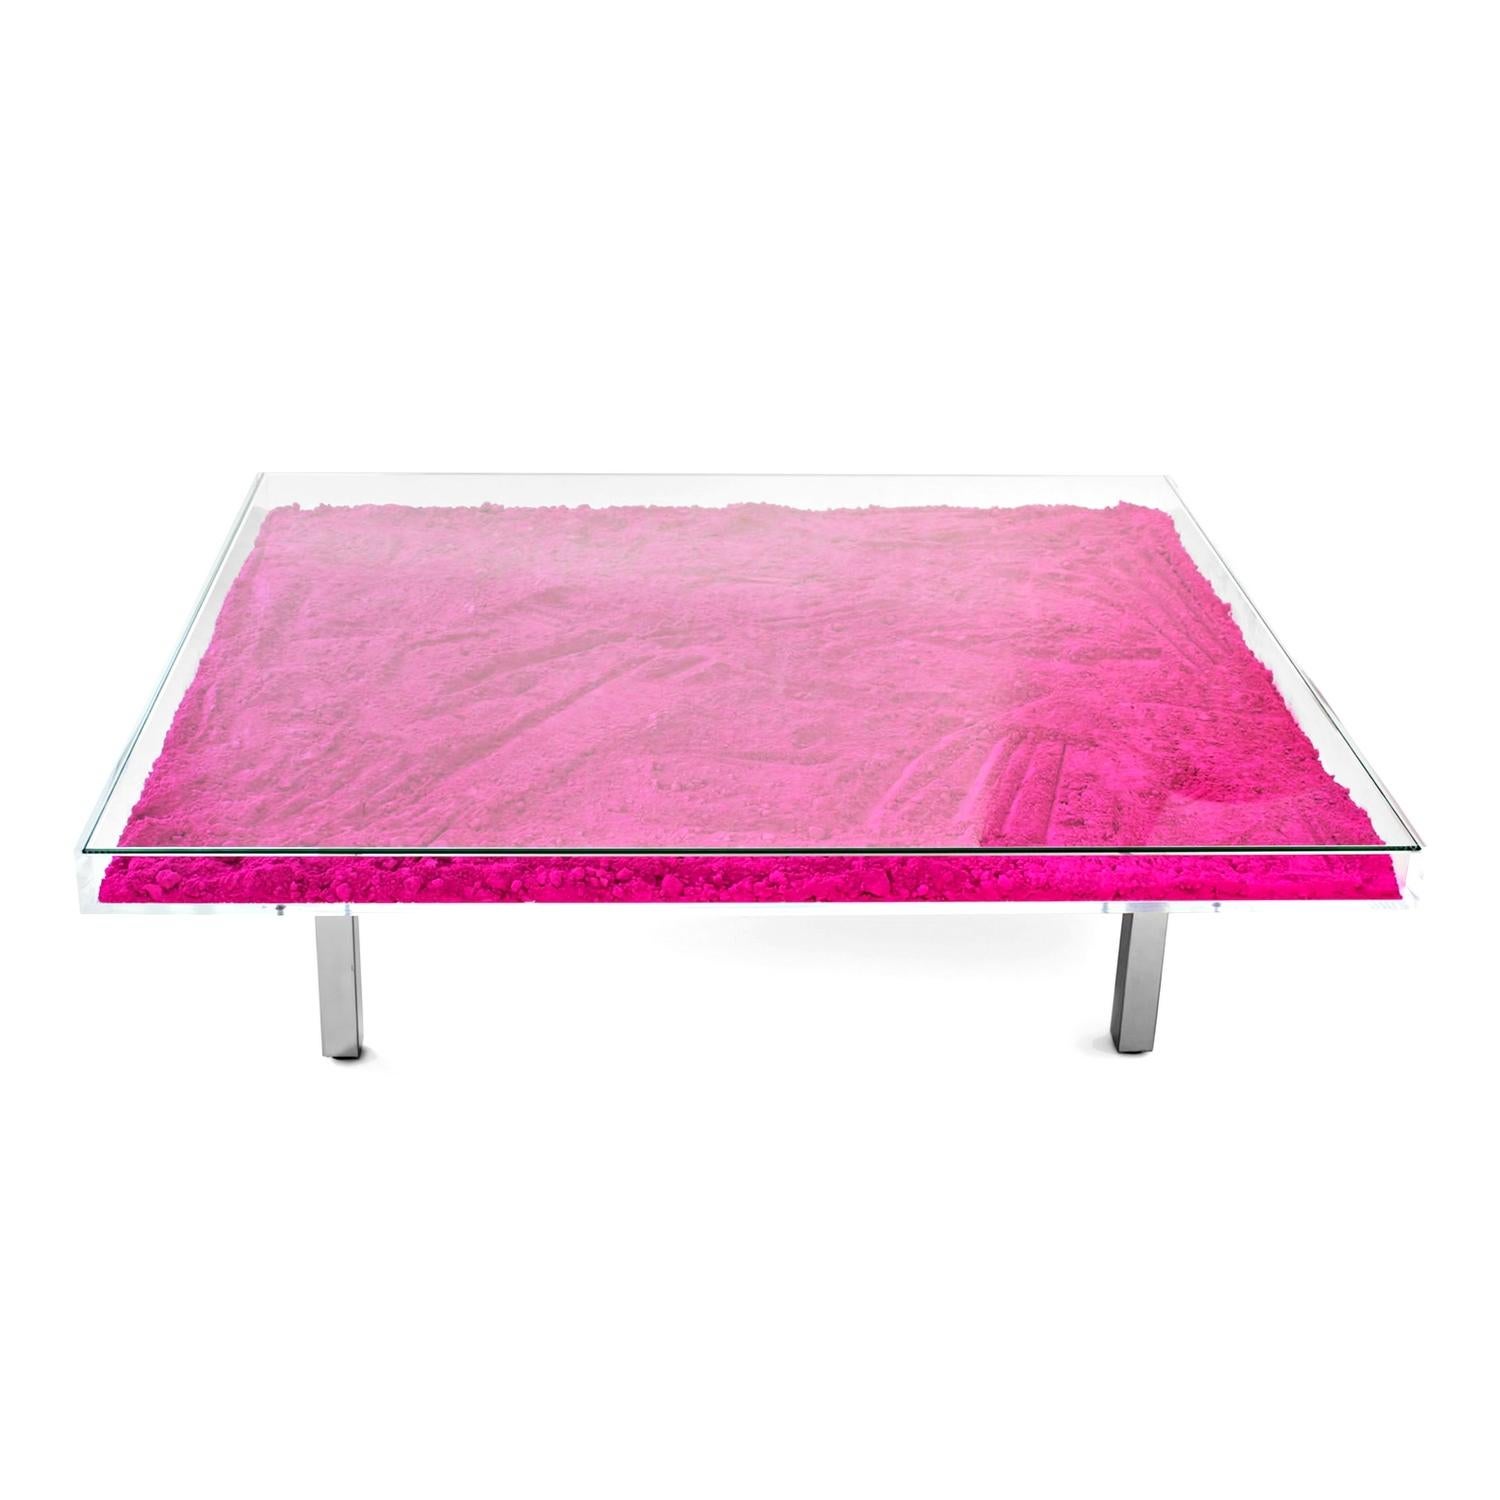 Moderne Table en verre « Monopink » rose de Yves Klein, fabriquée en France en vente